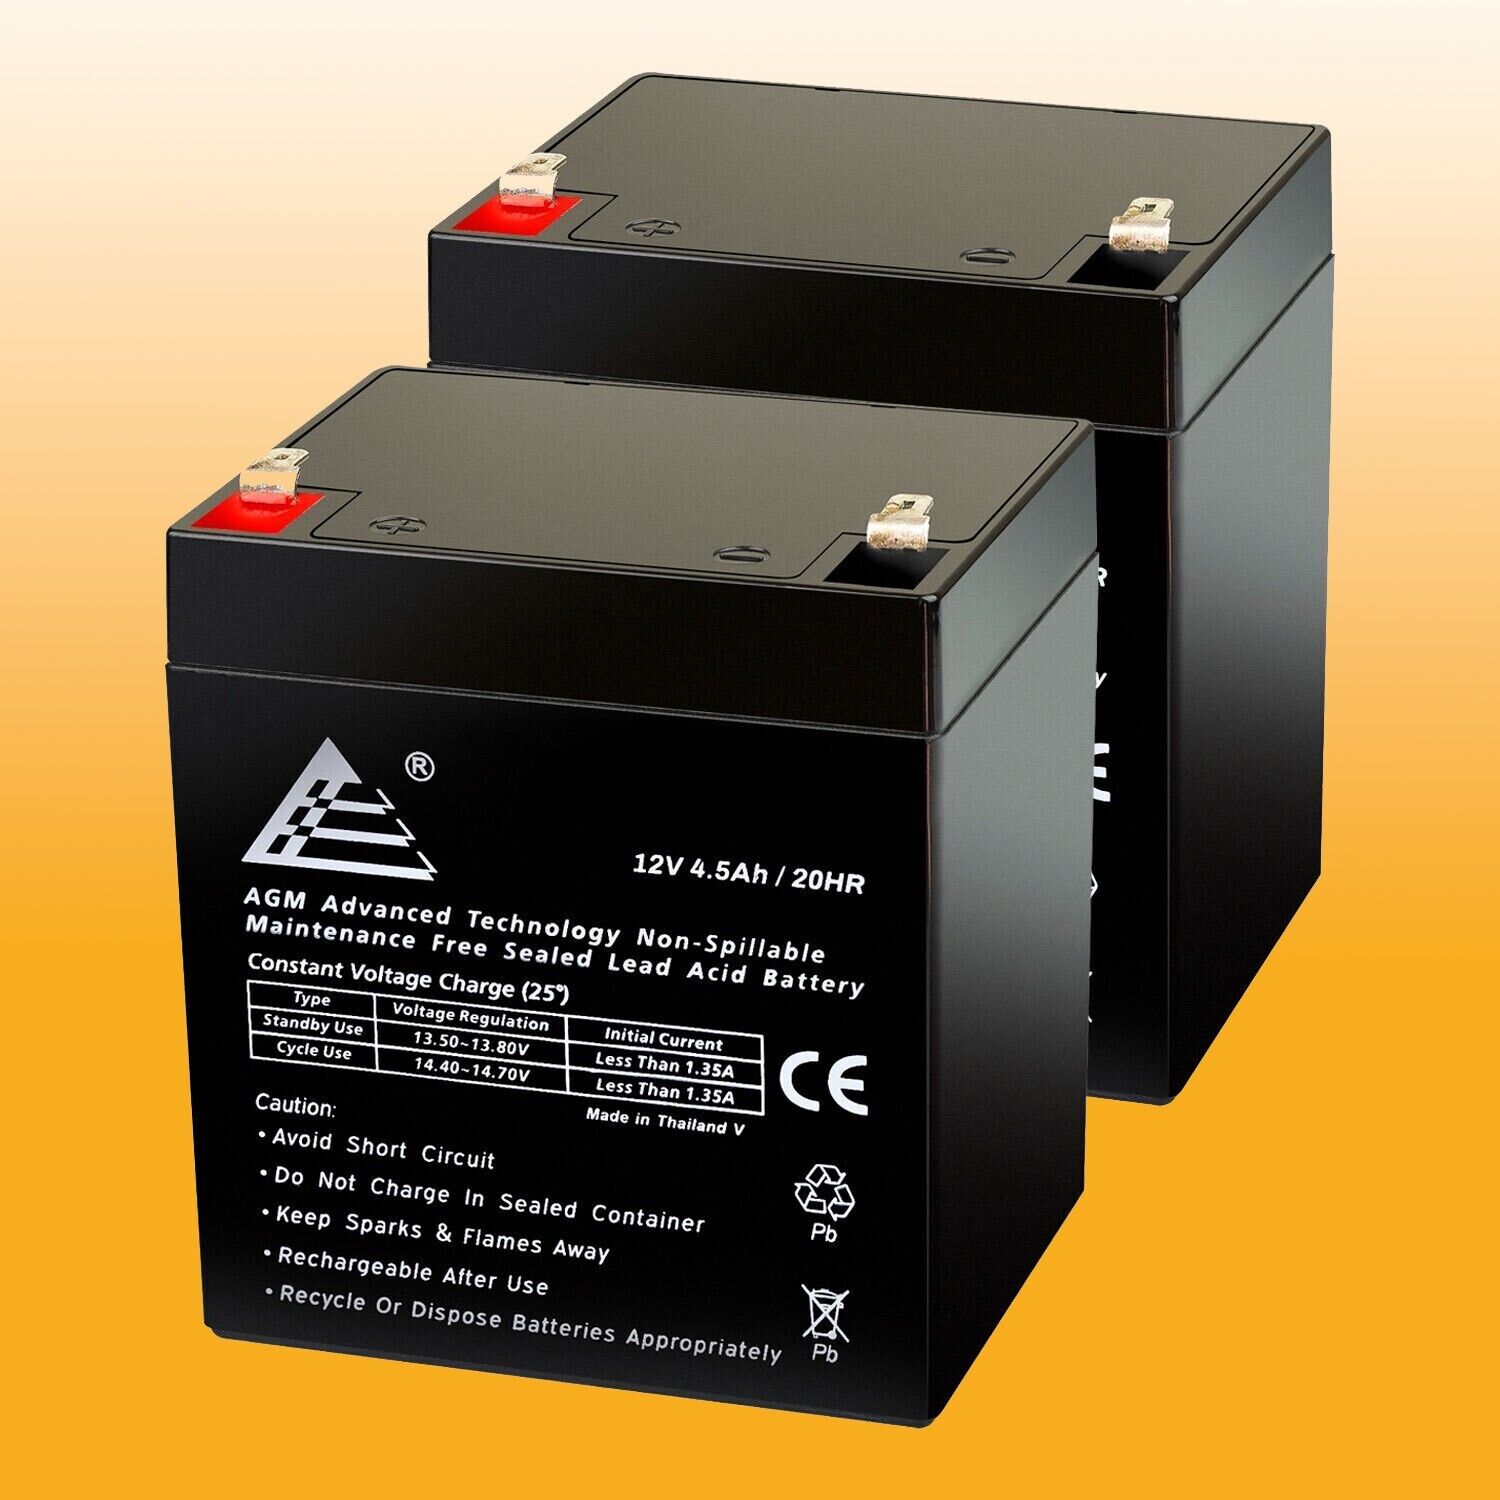 2 Pack_NEW_12V 4.5AH Sealed Lead Acid (SLA) Battery for APC UPS UB1245 eci power Q02BLHFM12_4.5-1 - фотография #2